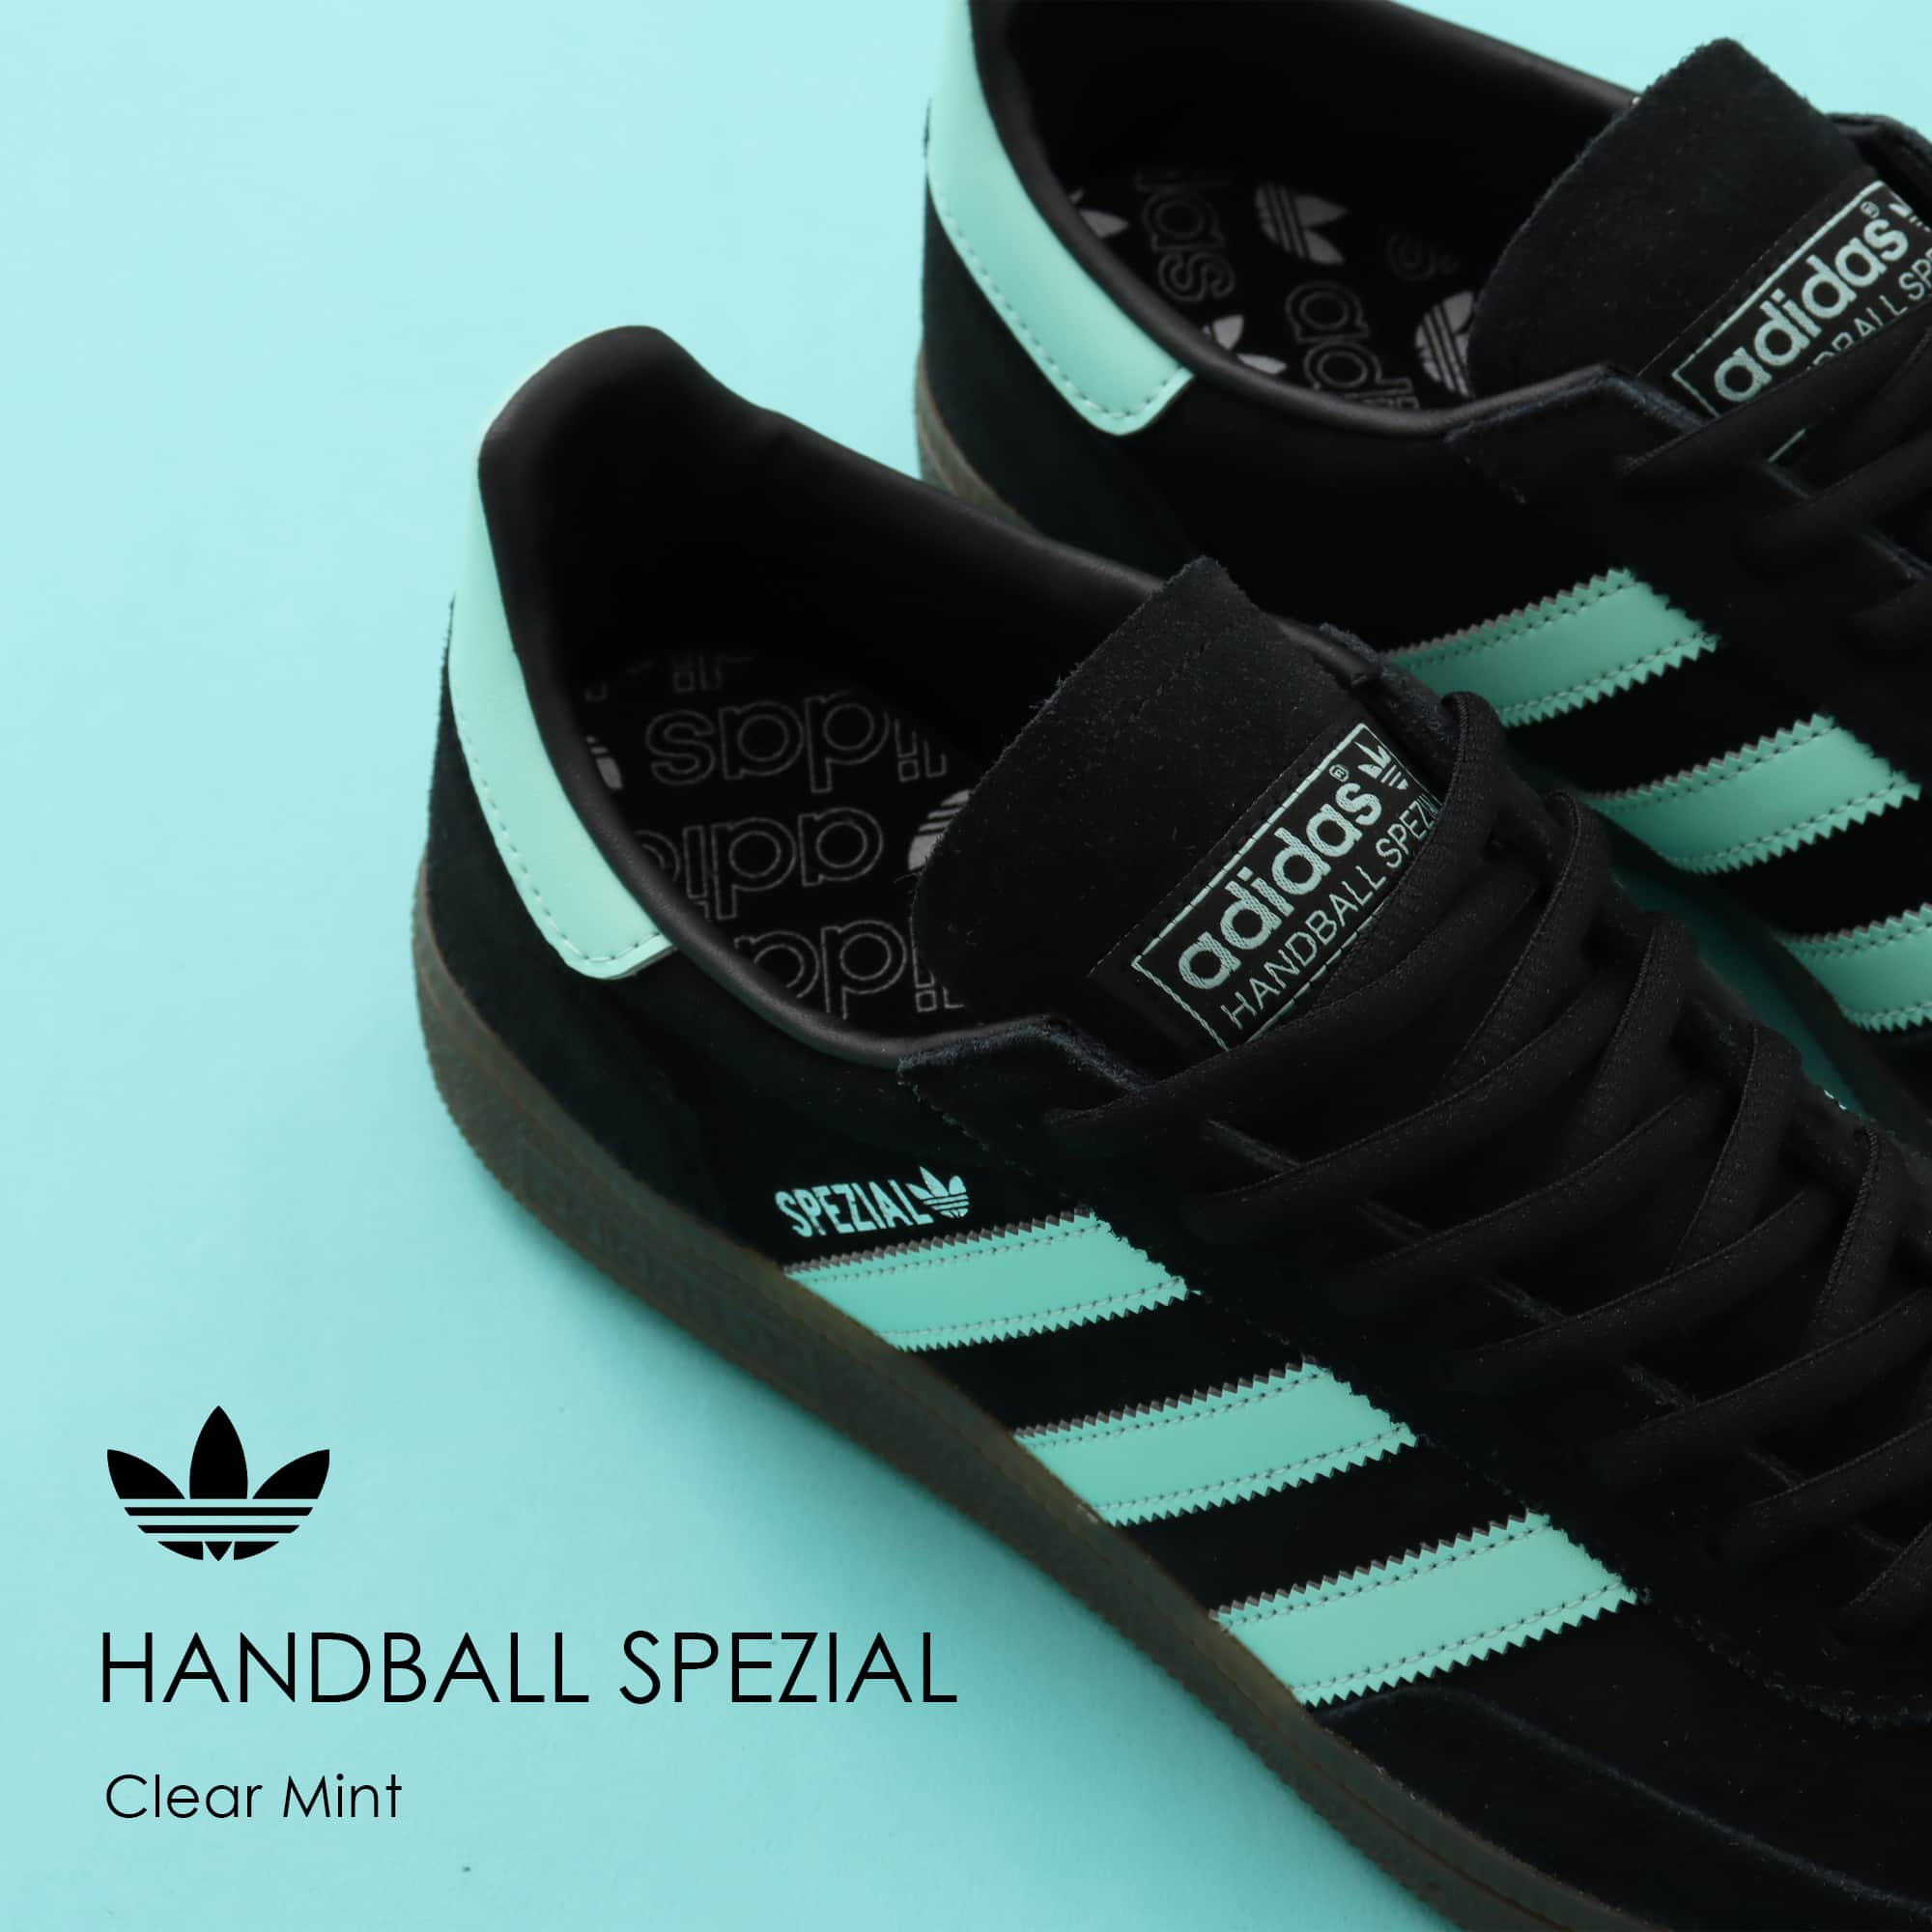 Adidas Originals Handball Spezial ミントサンバチーム